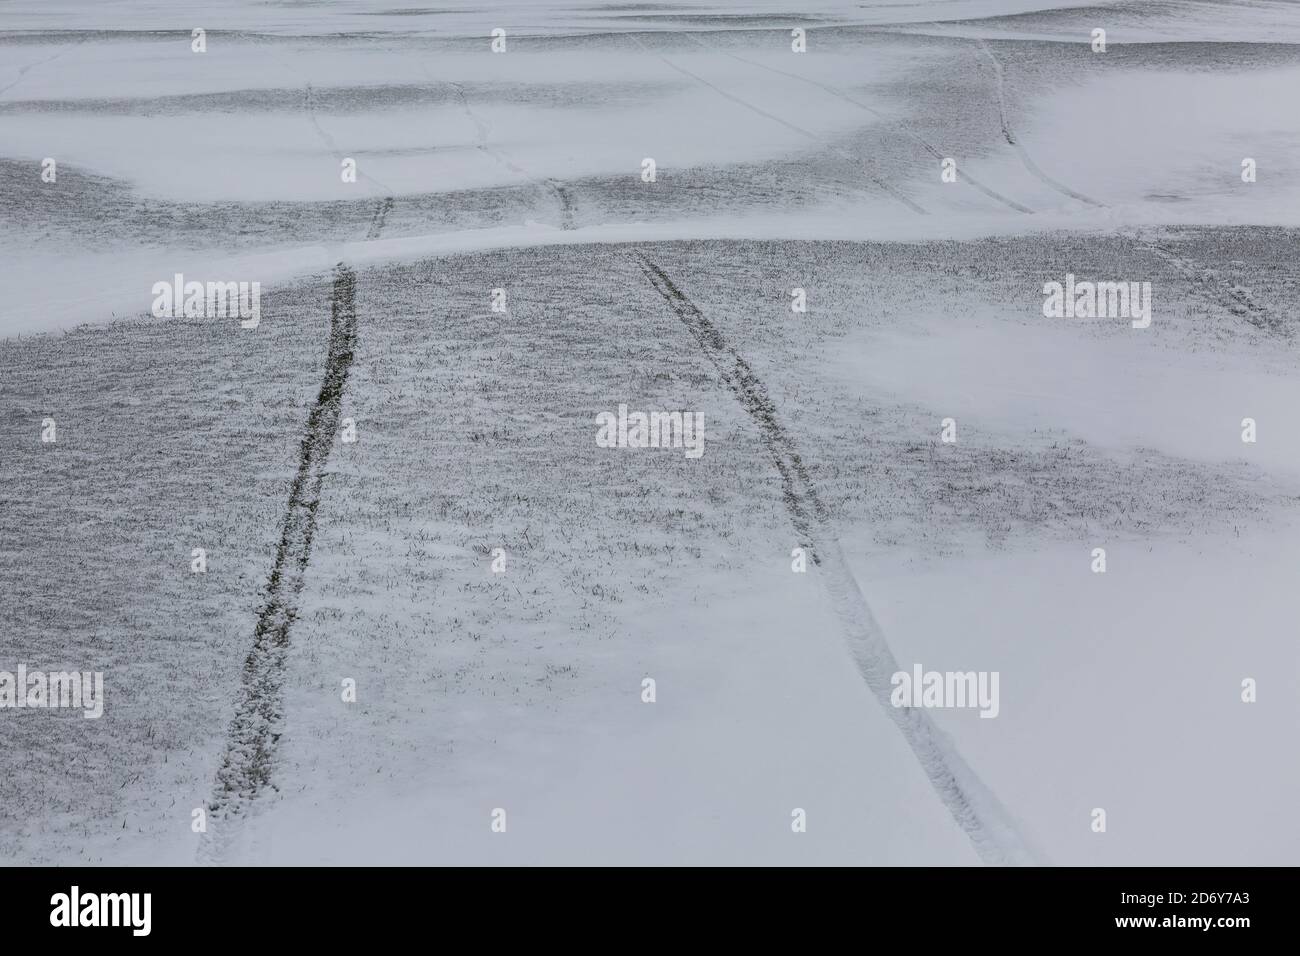 Tyre tracks across a snowy landscape Stock Photo